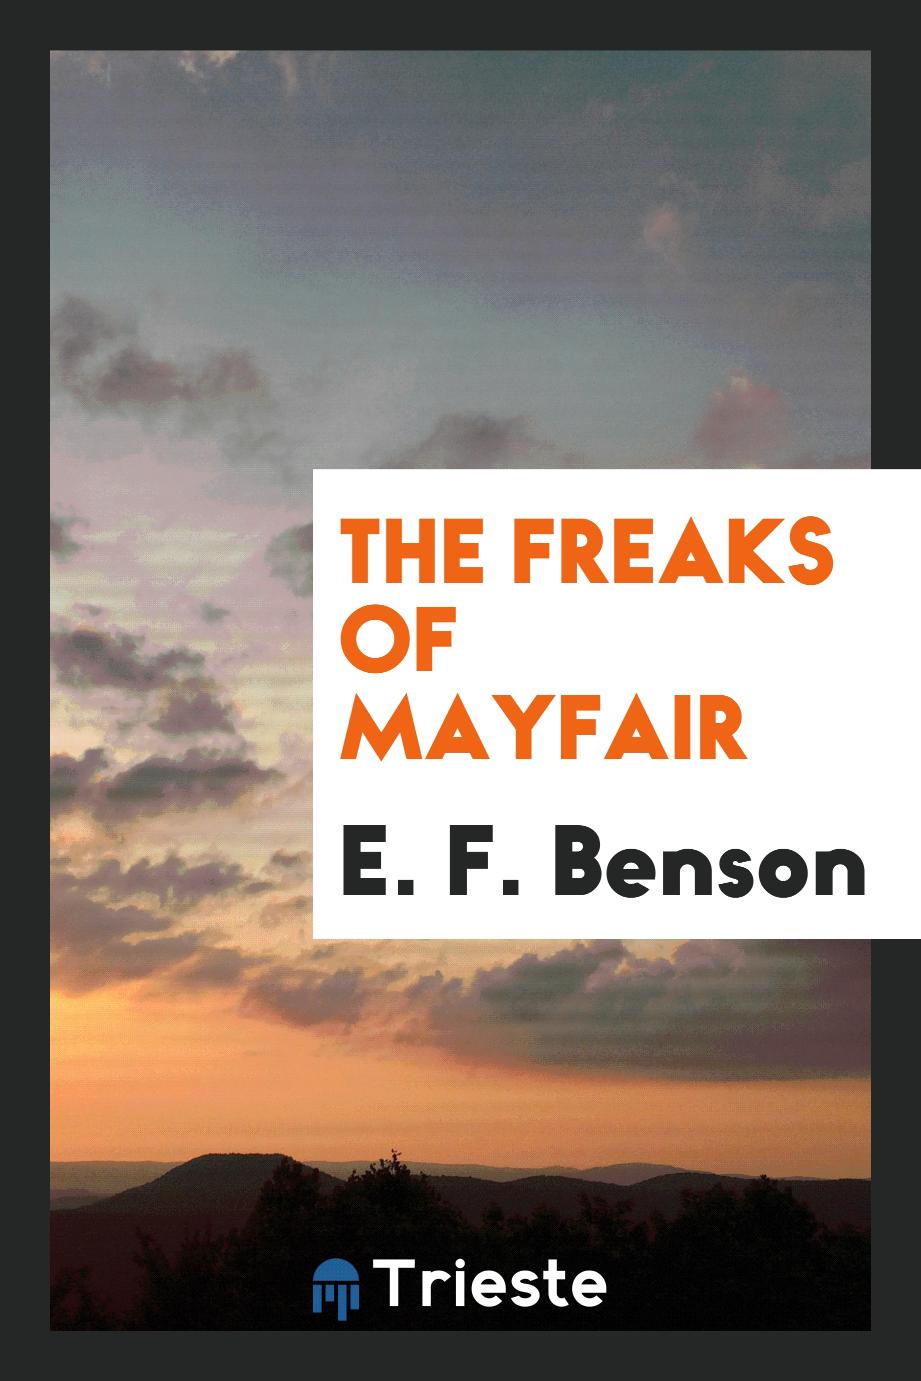 The freaks of Mayfair